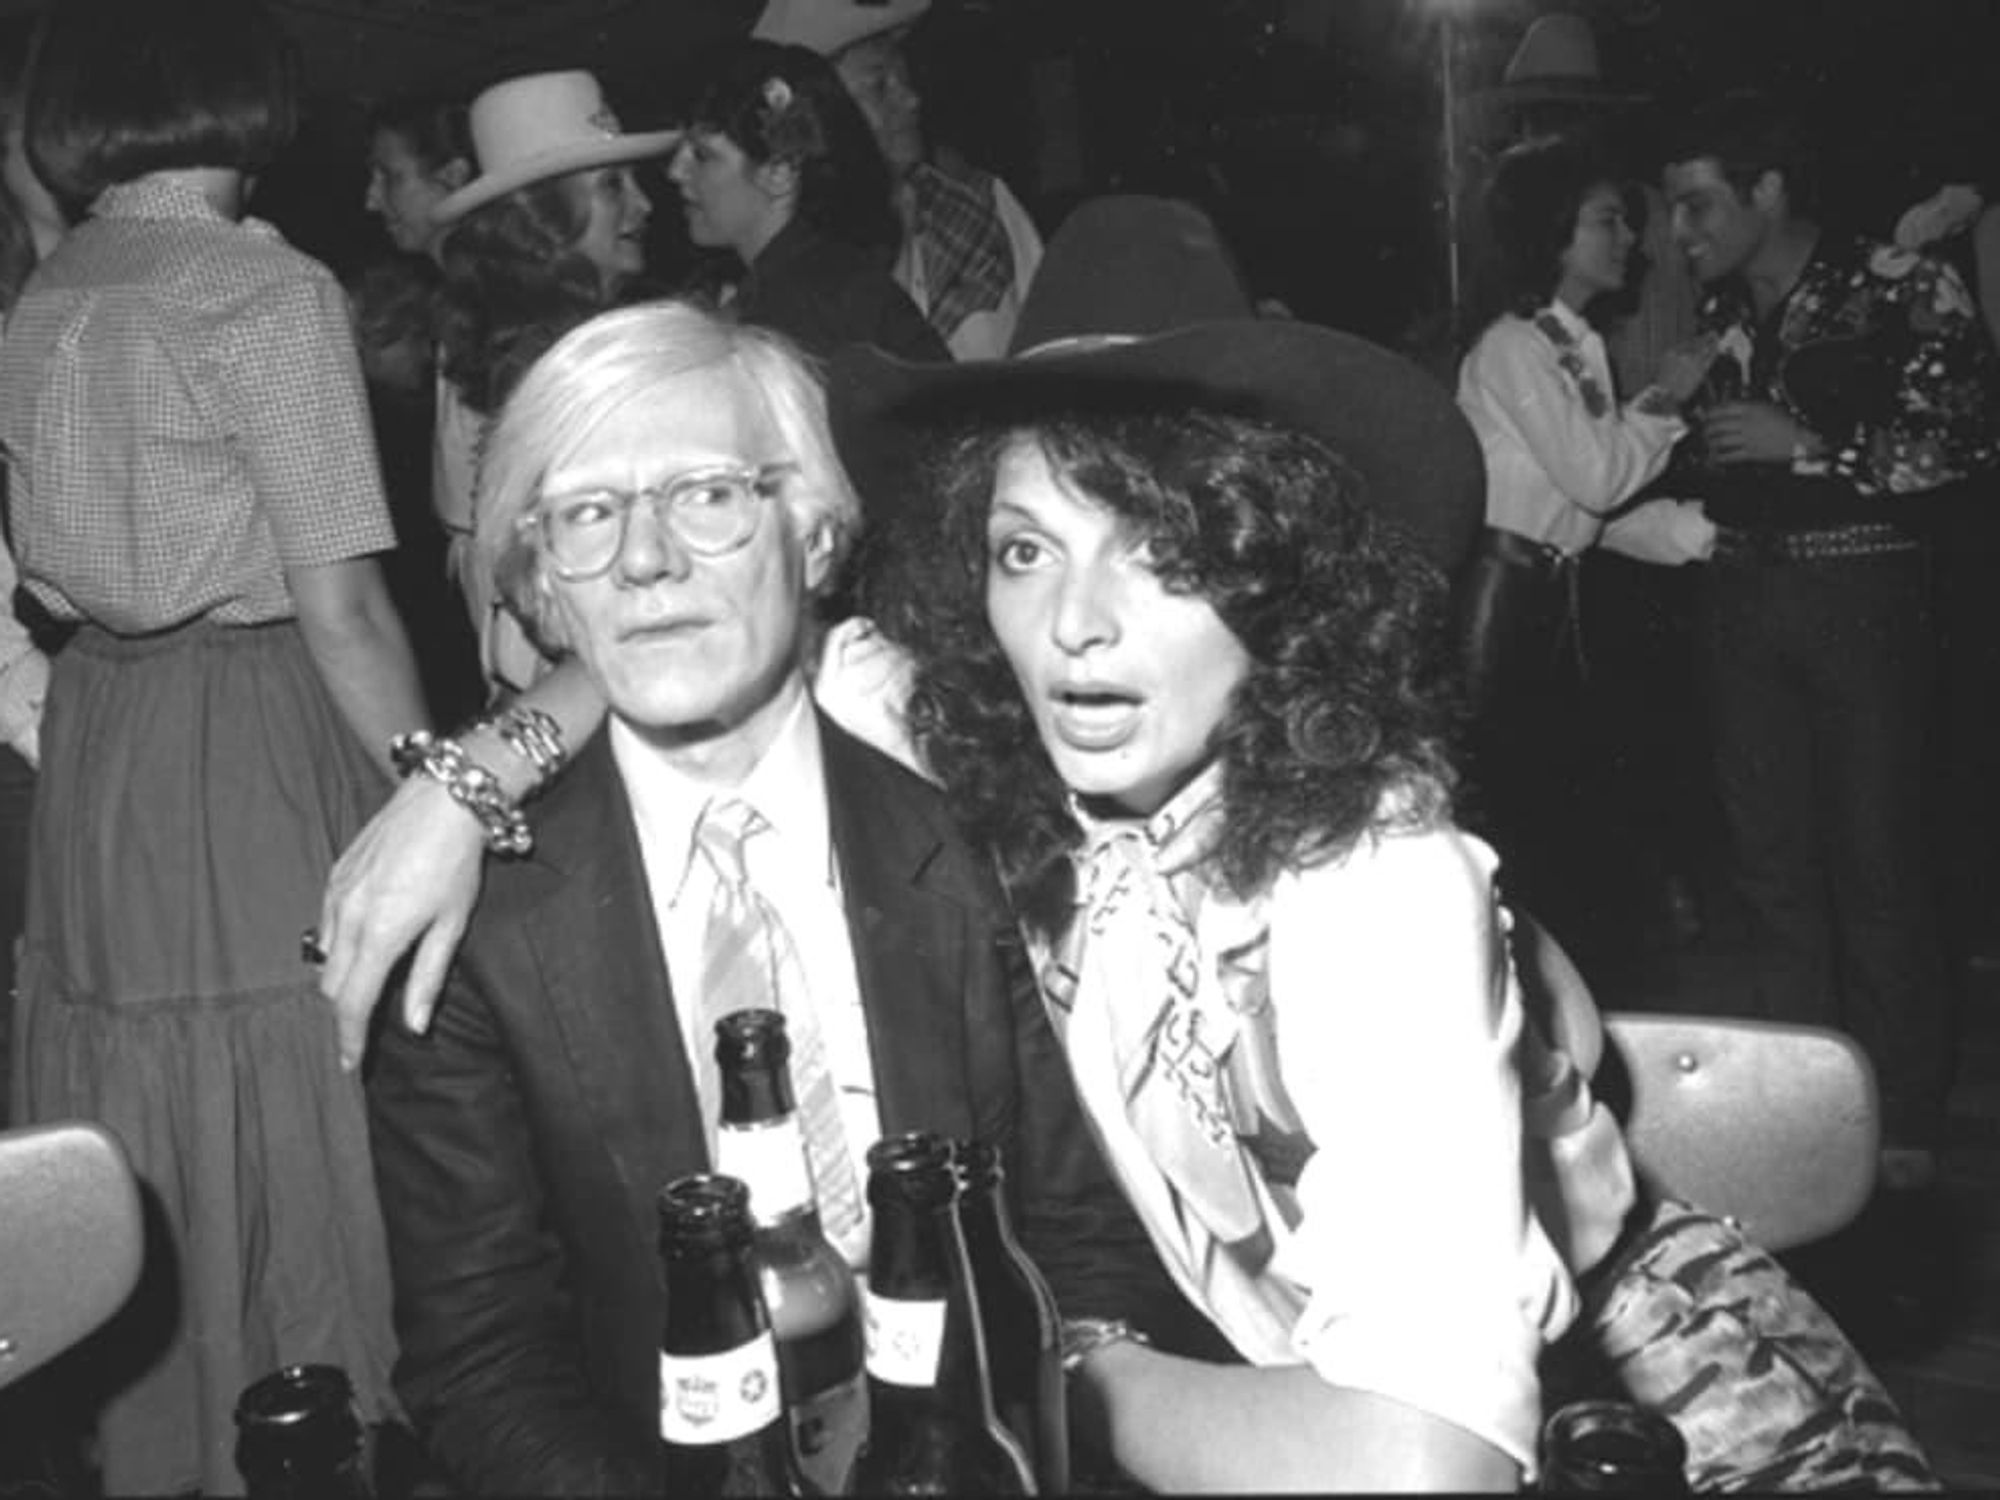 ndy Warhol and Diane Von Furstenberg at the 1980 premiere of "Urban Cowboy" at Gilley's Pasadena.